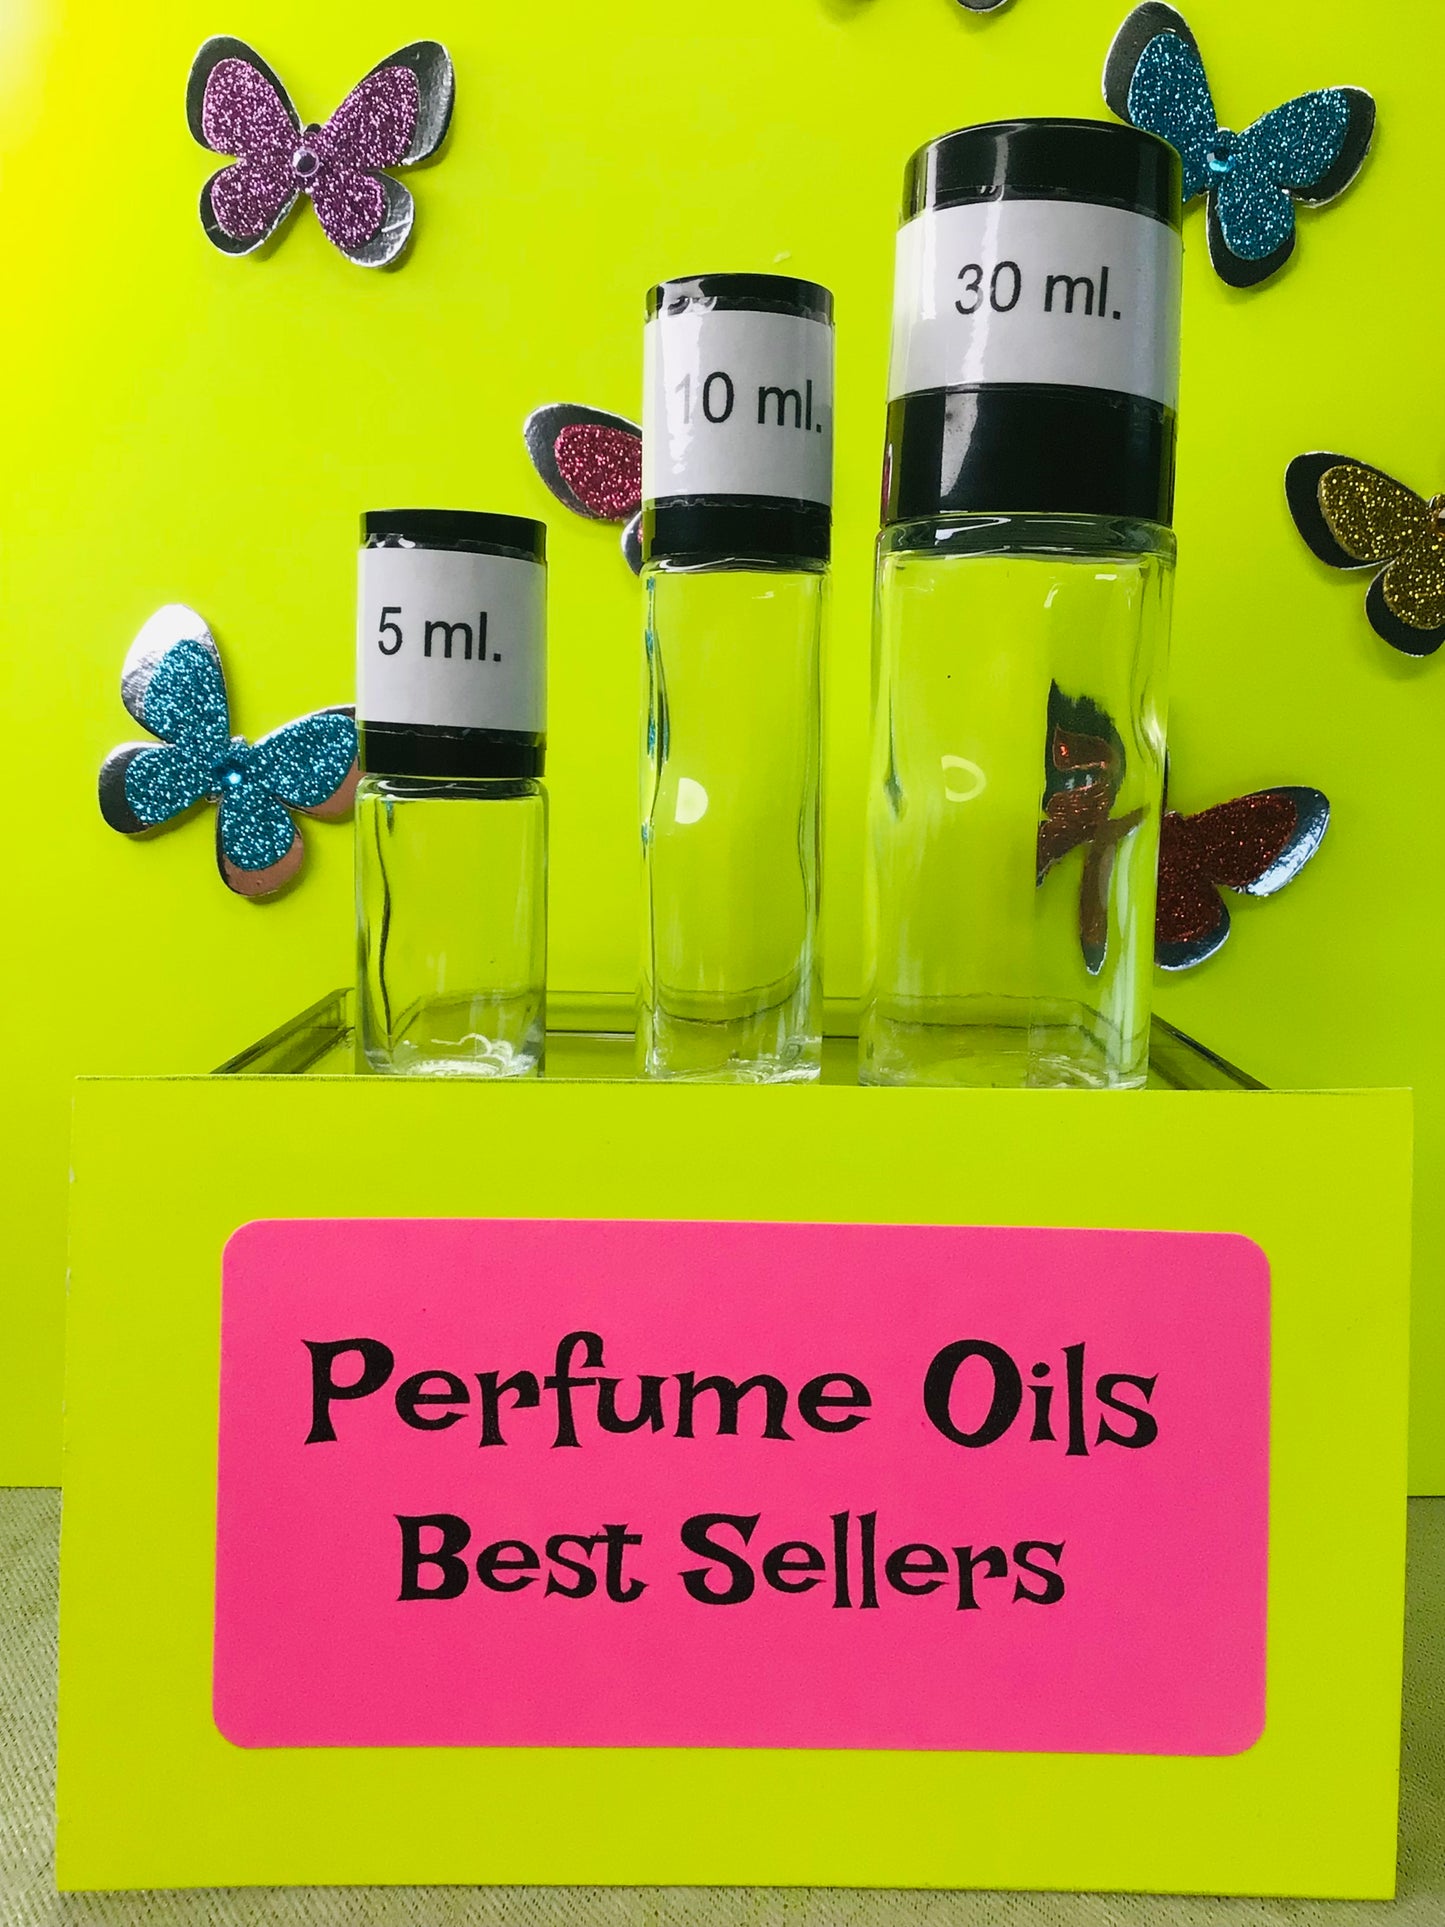 Perfume Oils, "A", Best Selling, Pure Fragrances, Premium Body Oils